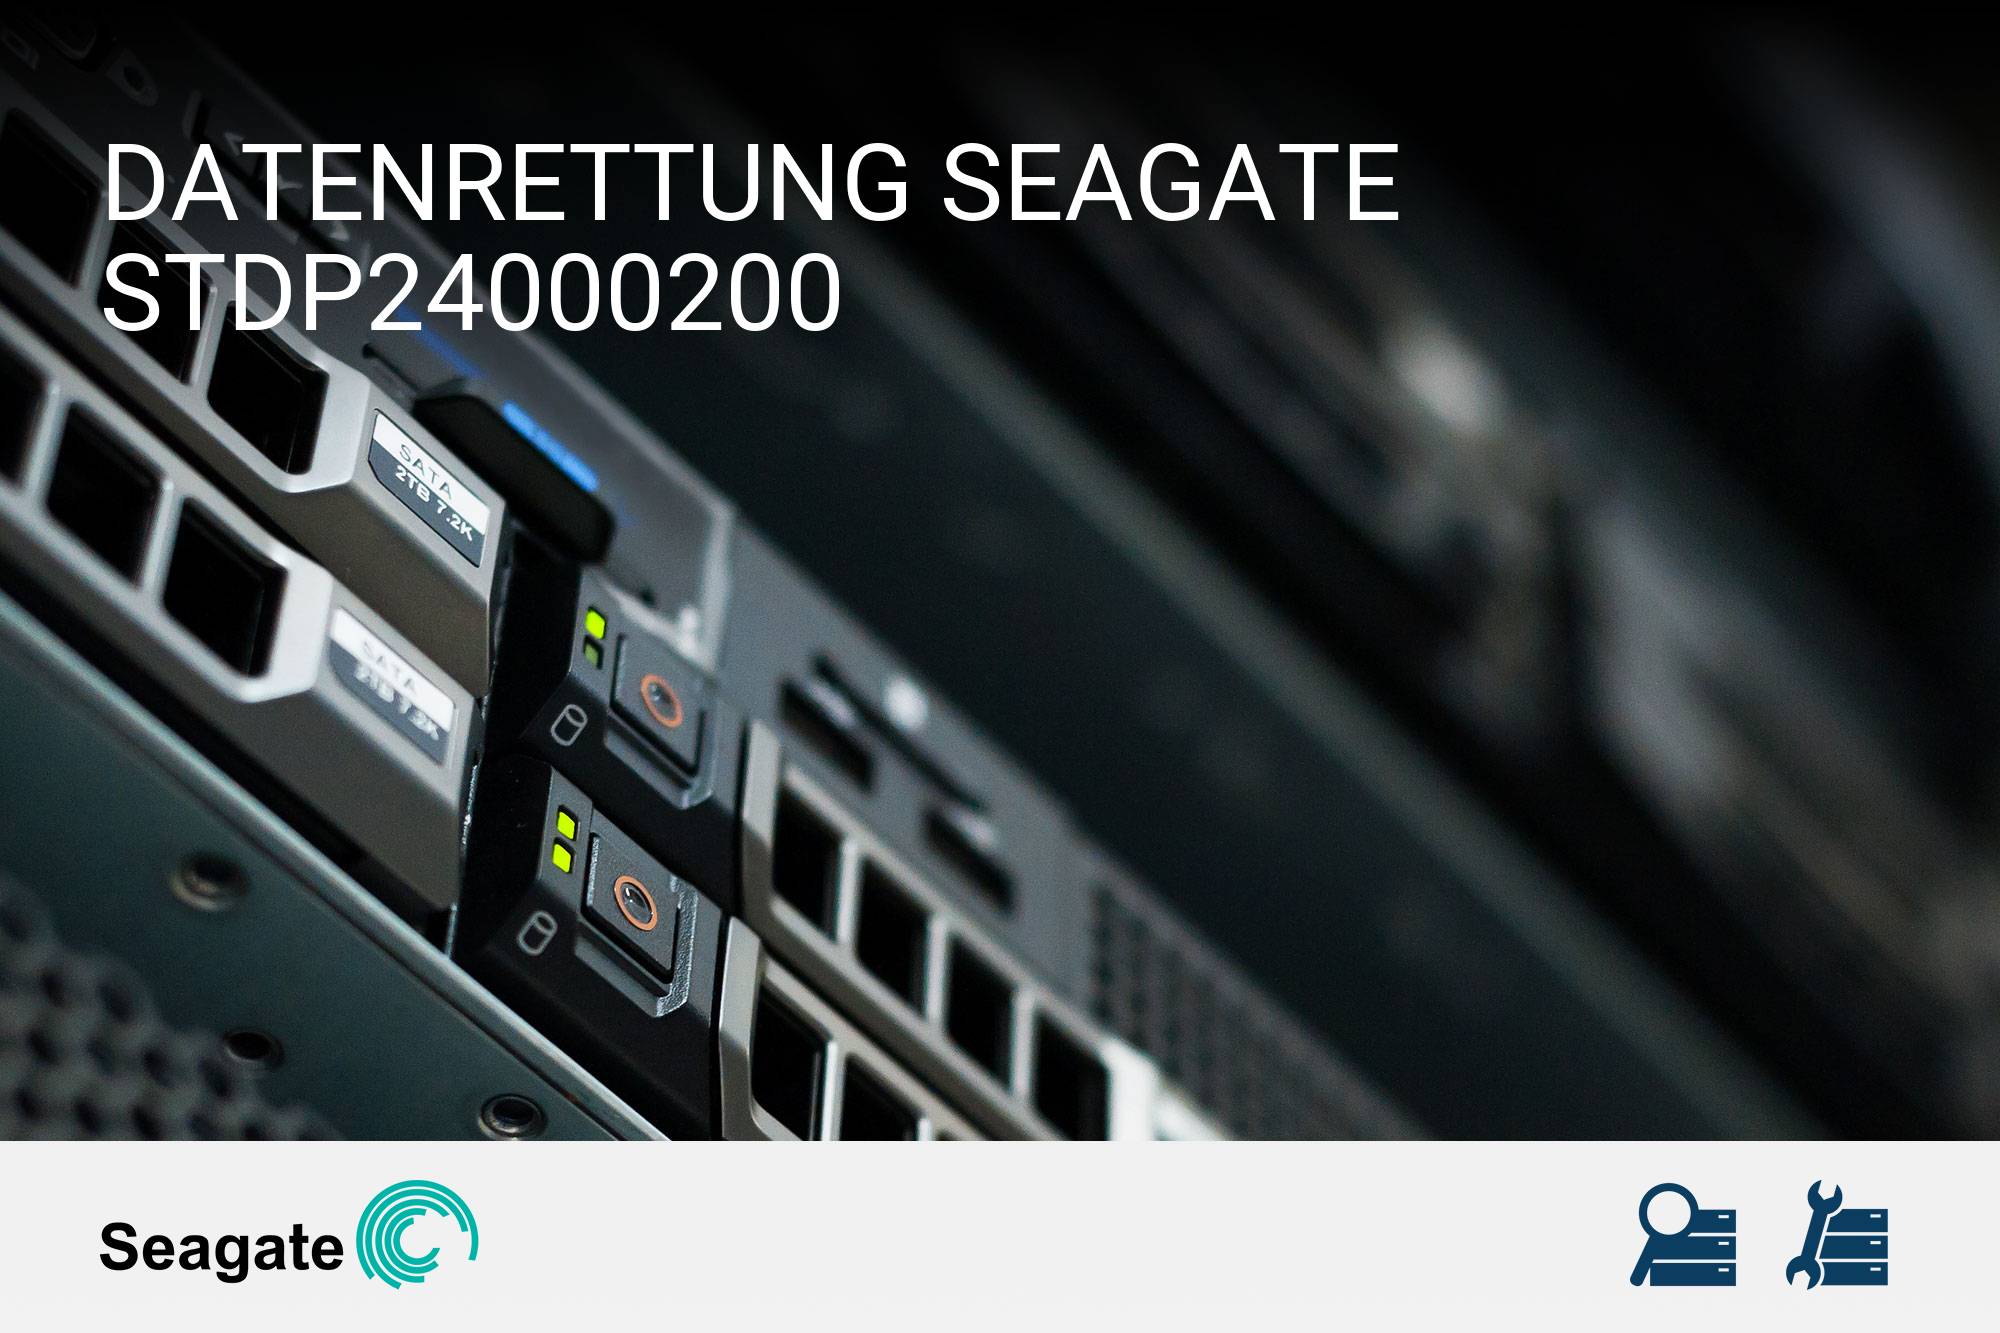 Seagate STDP24000200